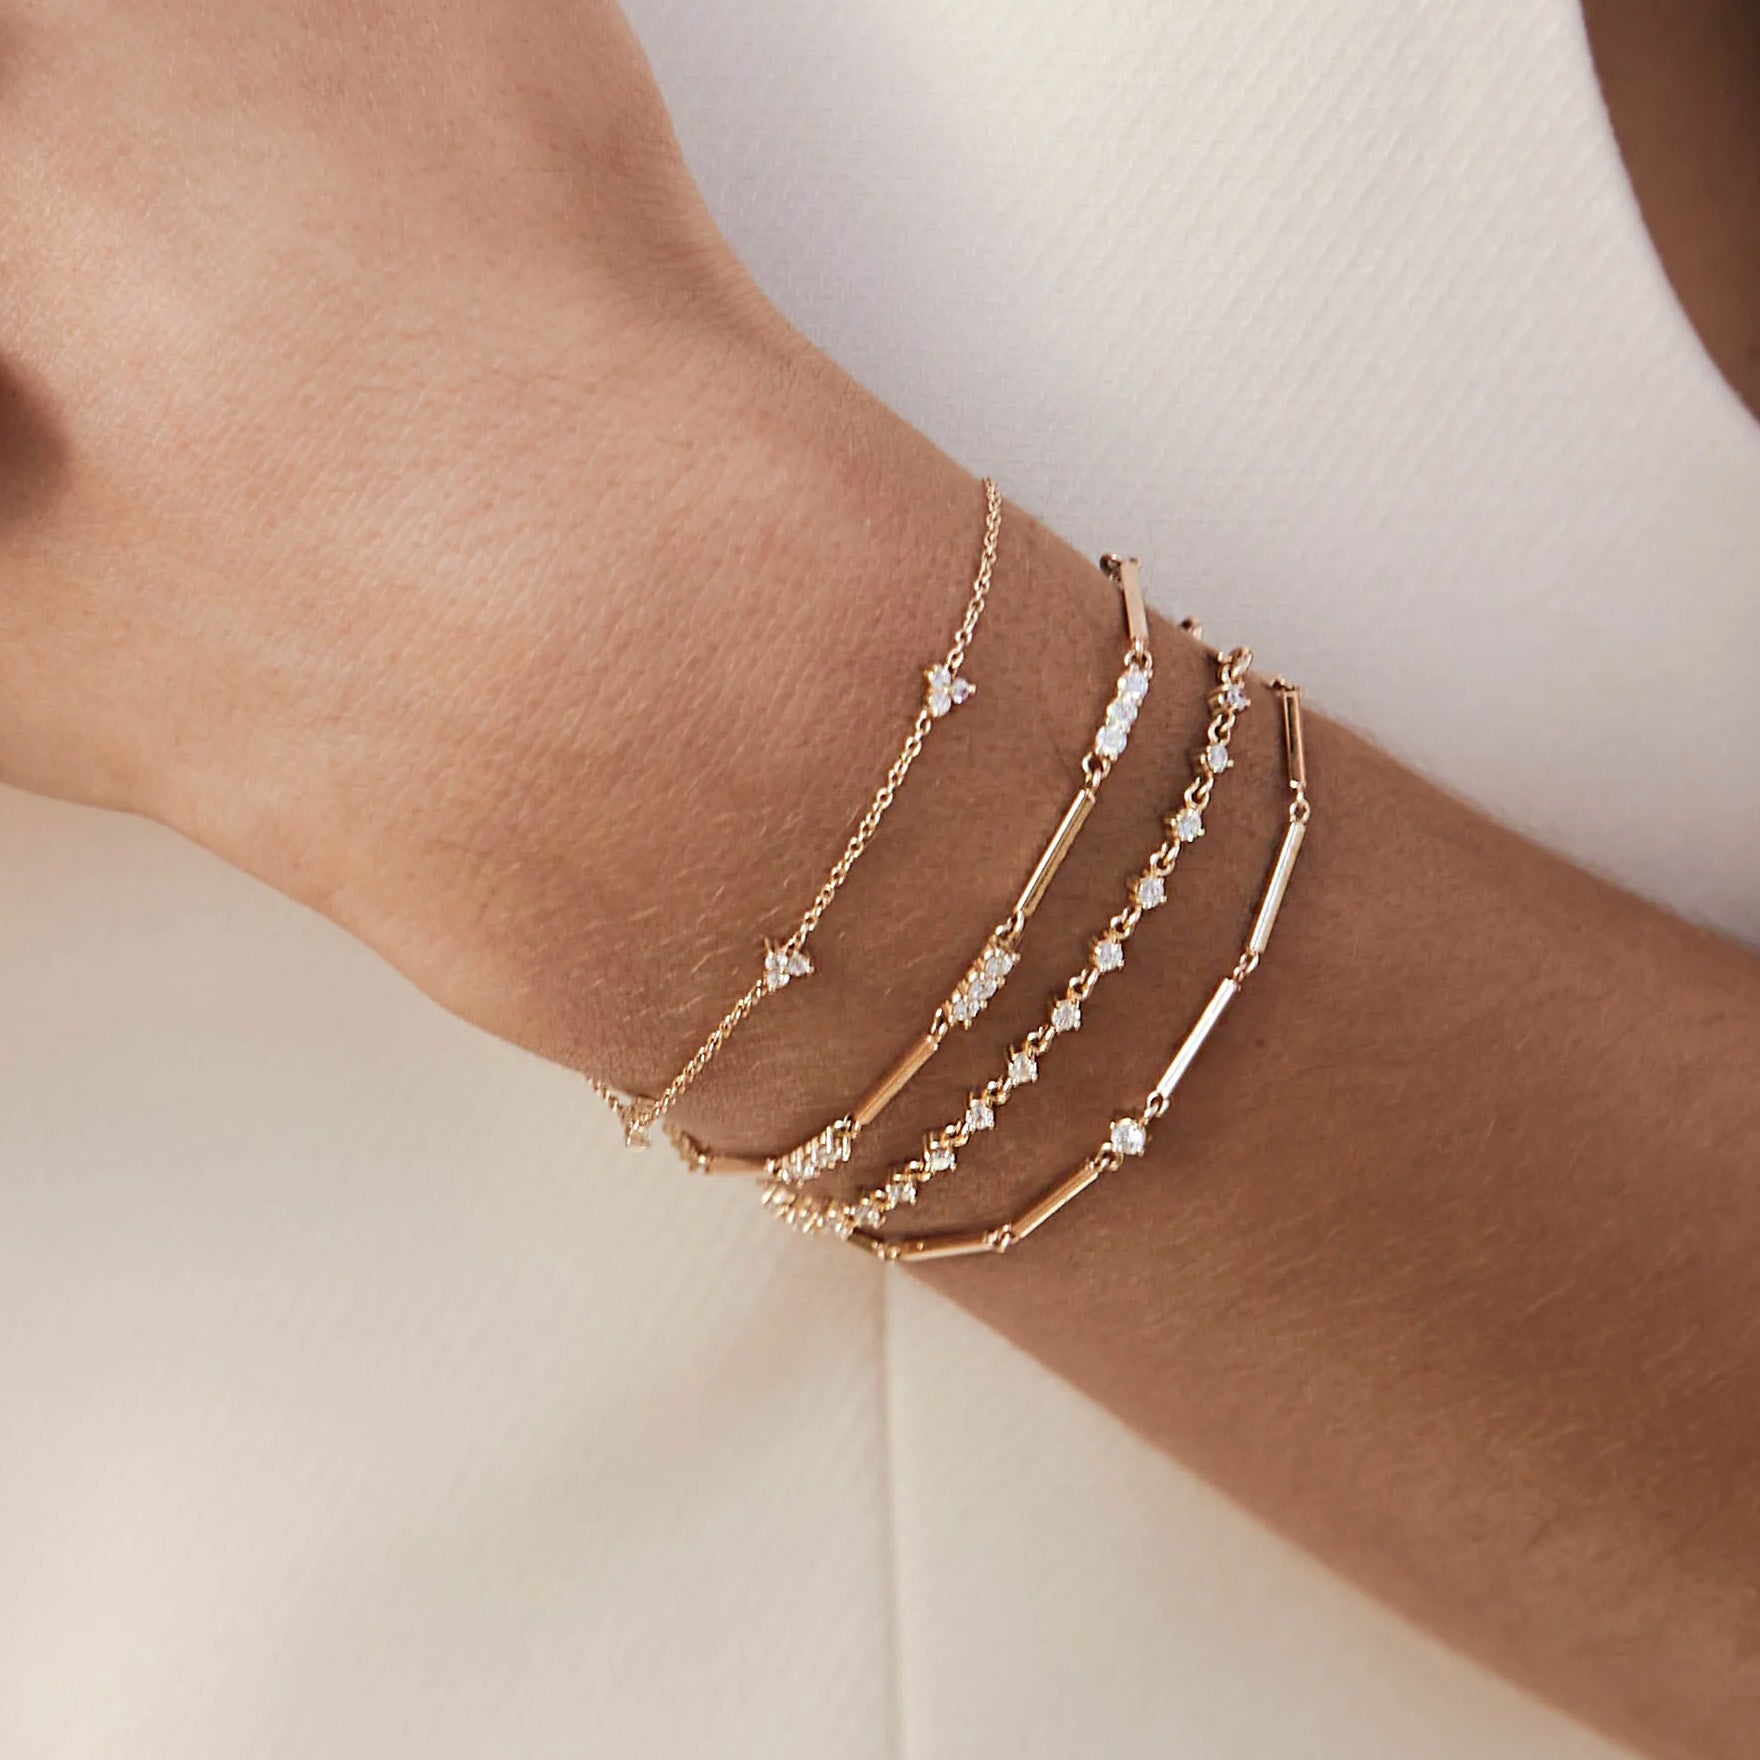 14K Gold Bracelet with Three Prong-Set Diamond Trio Stations - Peridot Fine Jewelry - Zoe Chicco